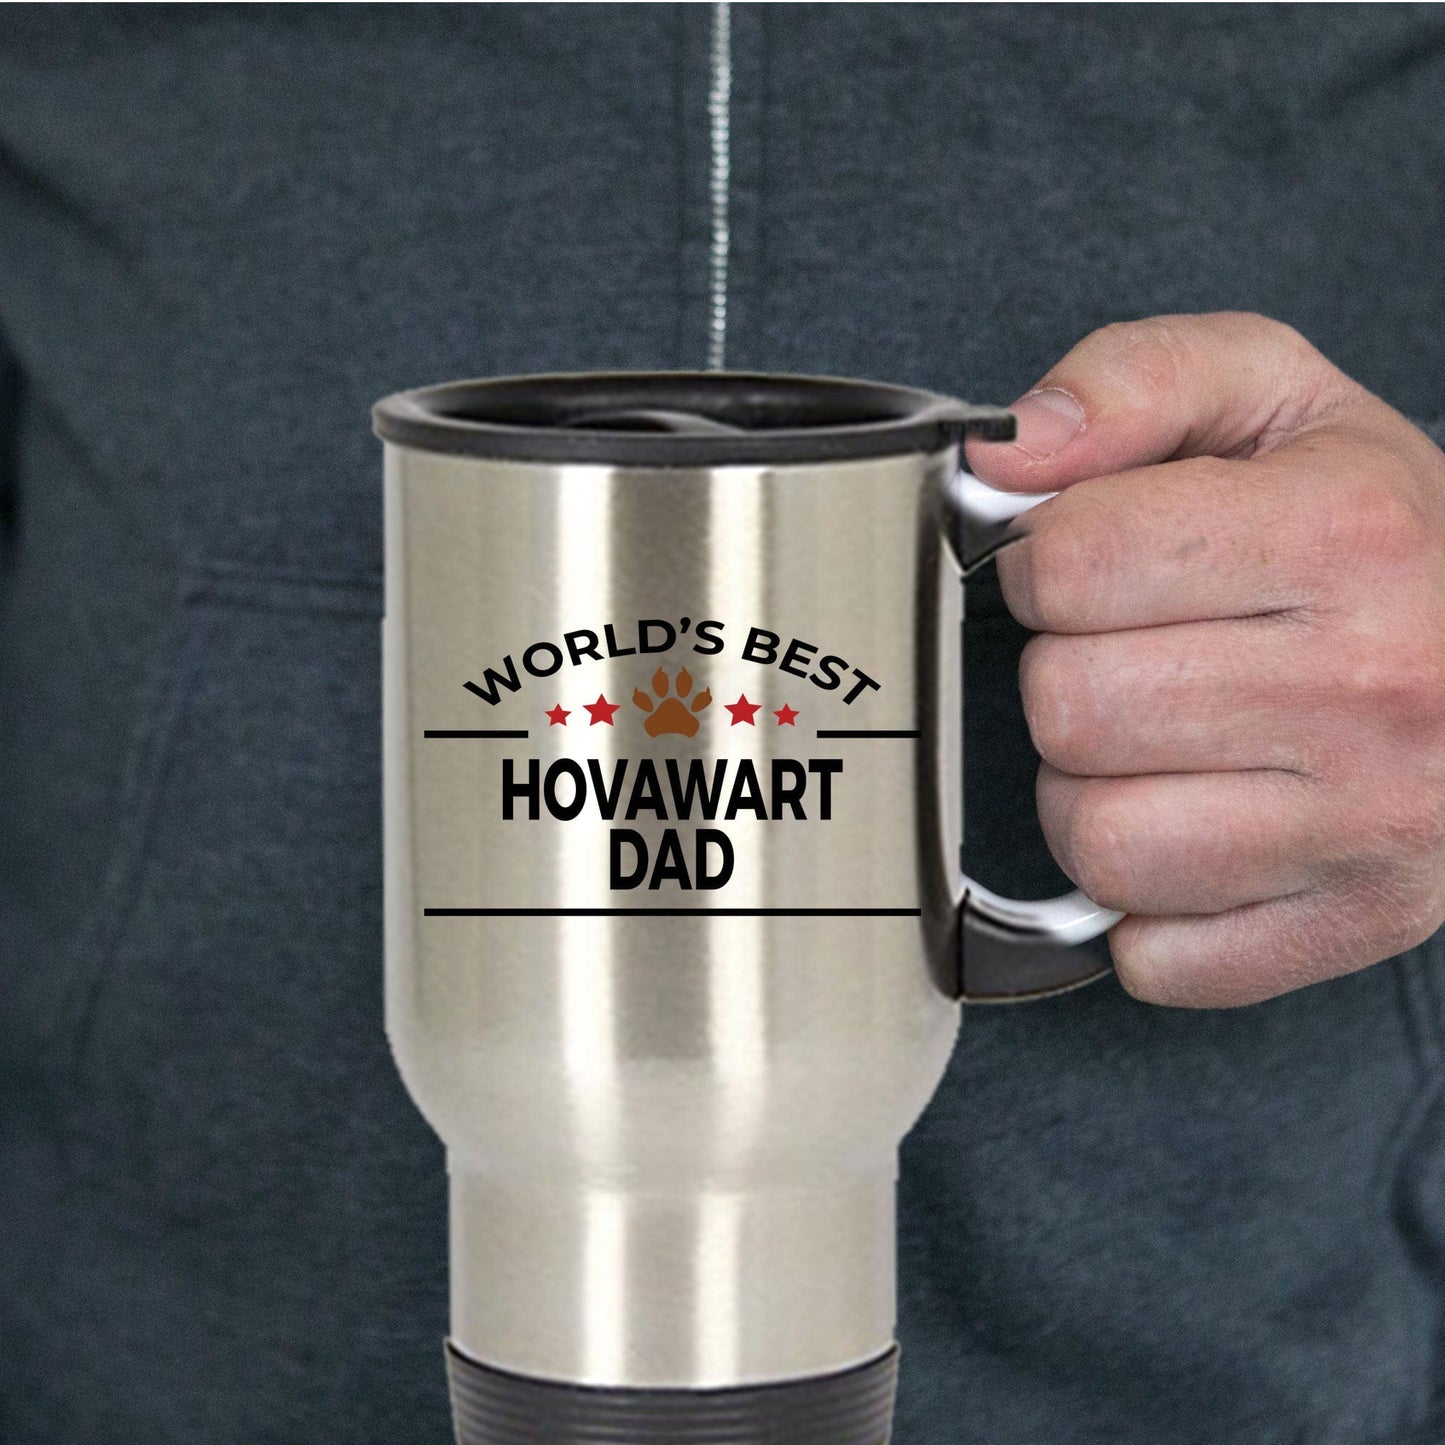 Hovawart Dog Dad Travel Mug